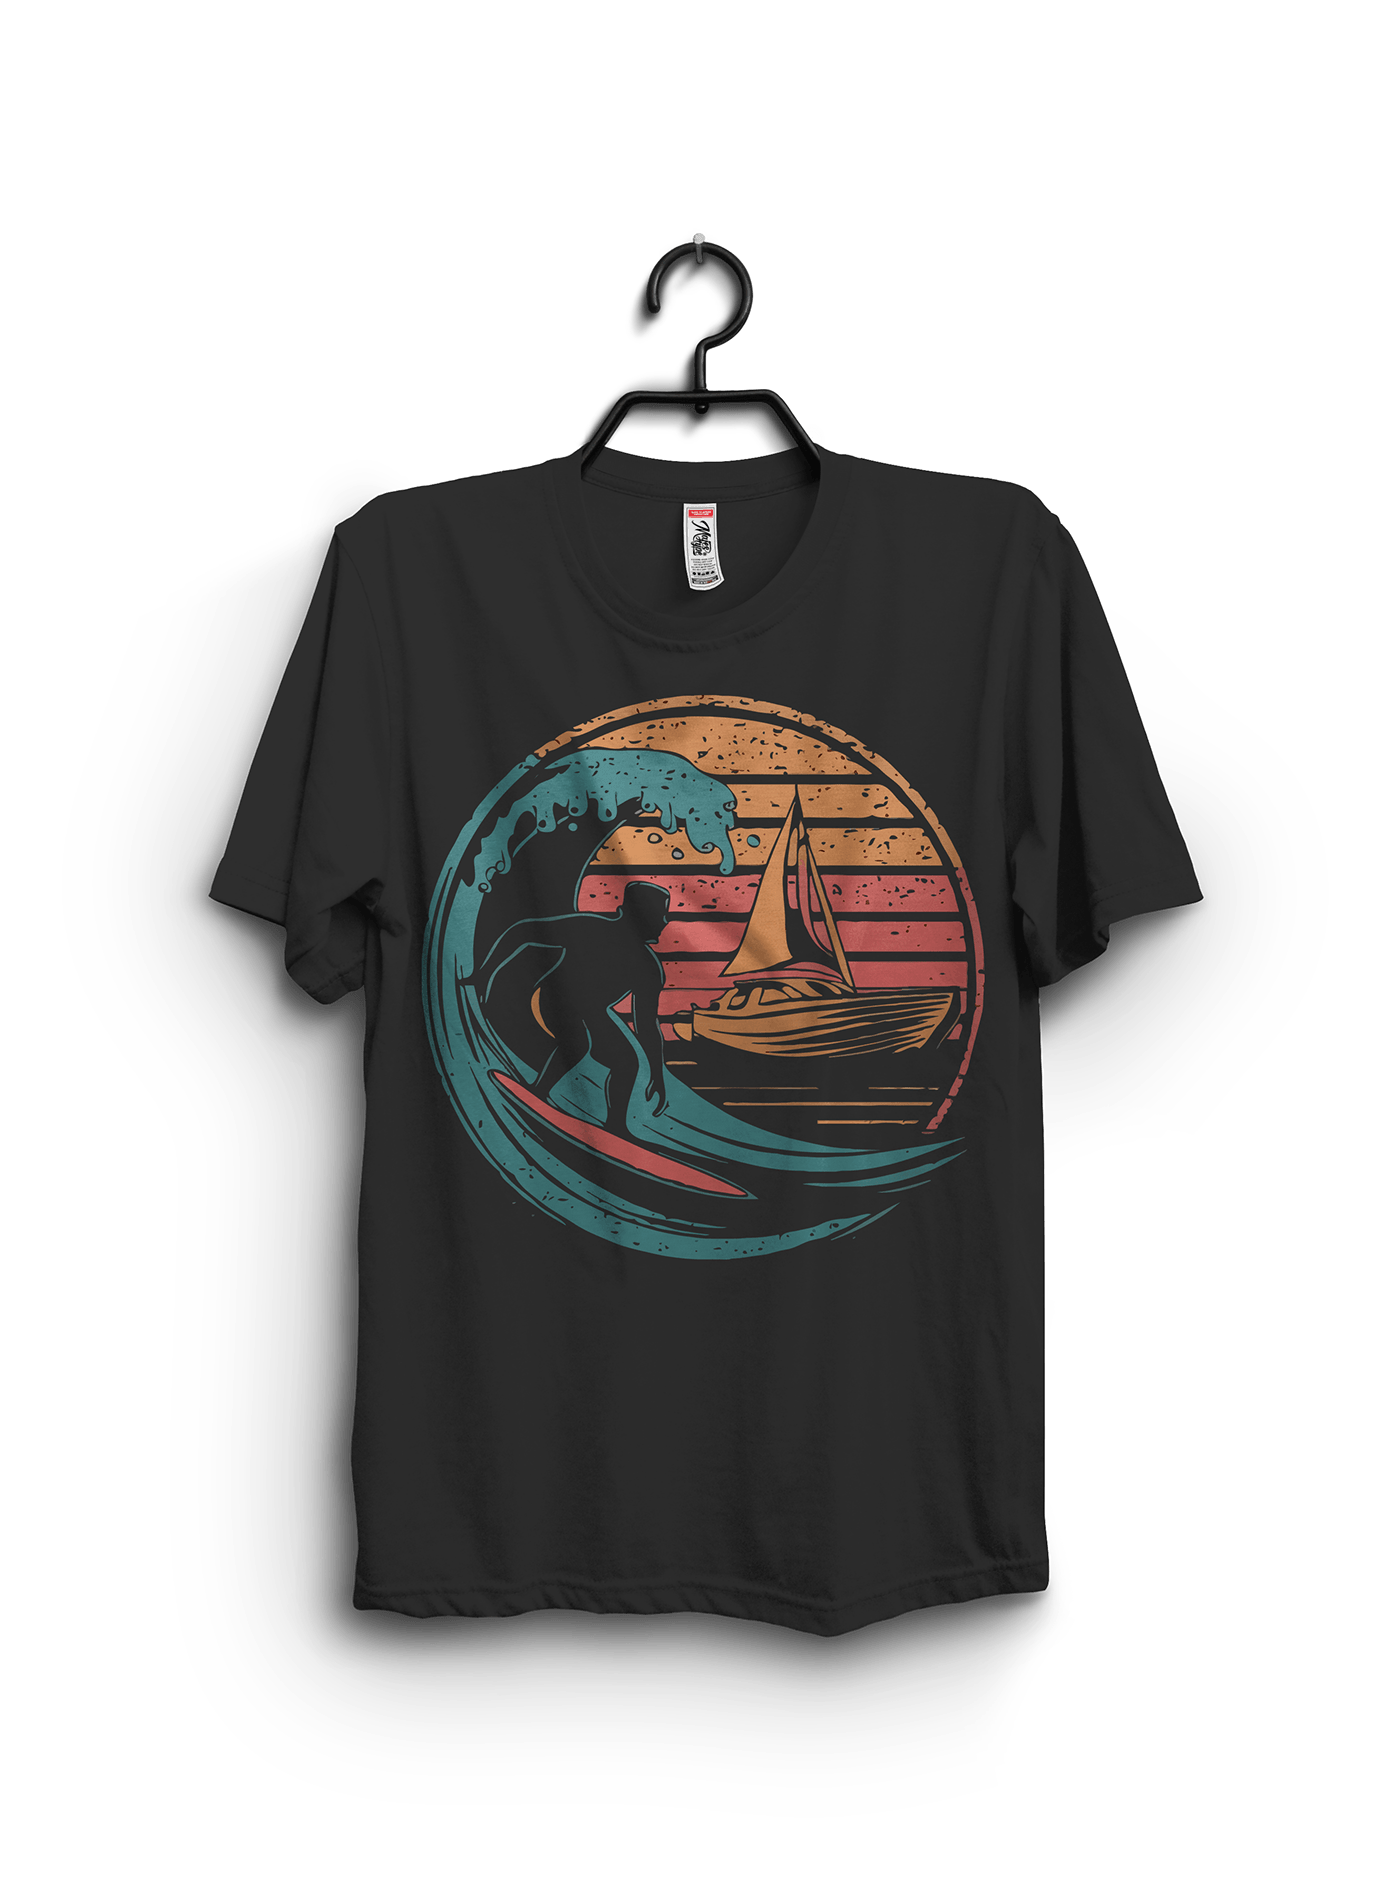 surfing surfing t-shirt beach surf art Ocean Surfer Girl surfing style surfing t-shirt design